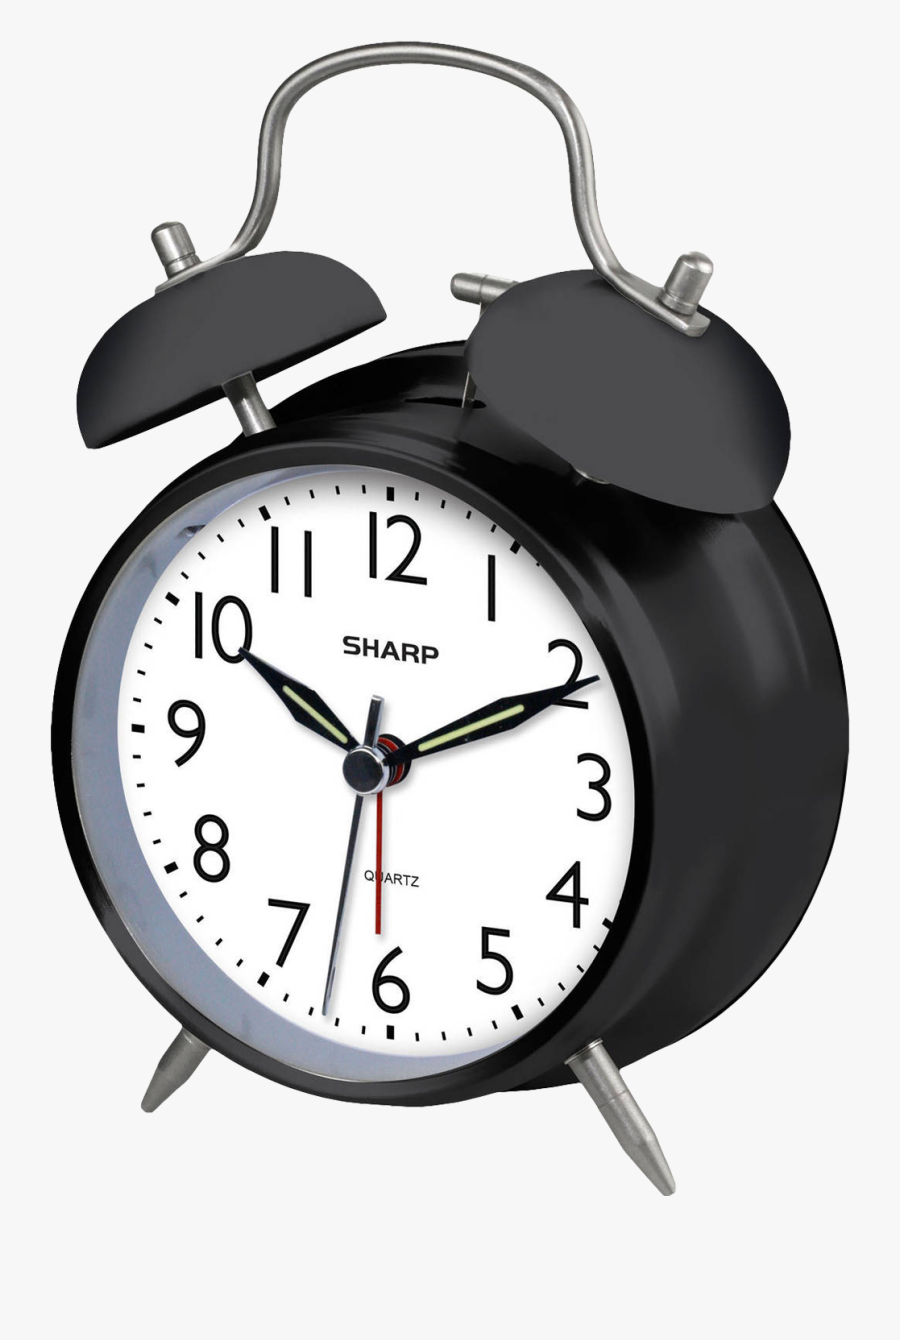 Sharp Clocl Alarm Png Image Clipart Image - Alarm Clock Transparent Png, Transparent Clipart